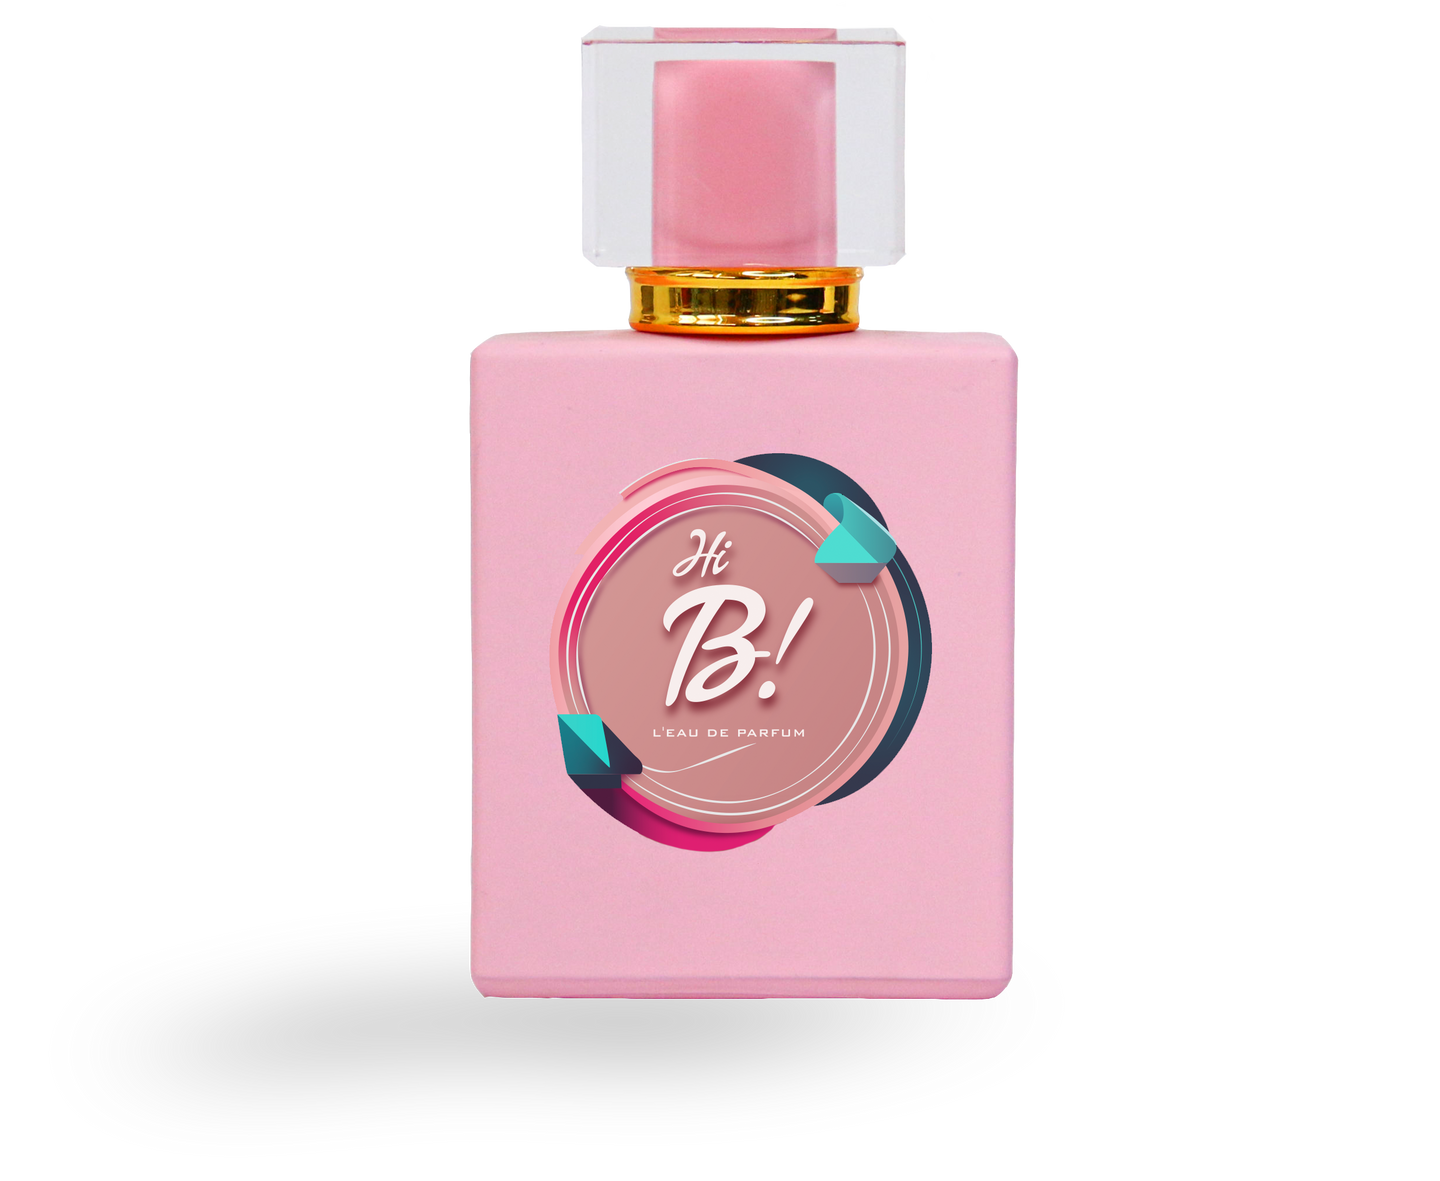 Hi B! - Perfume - Limited Edition